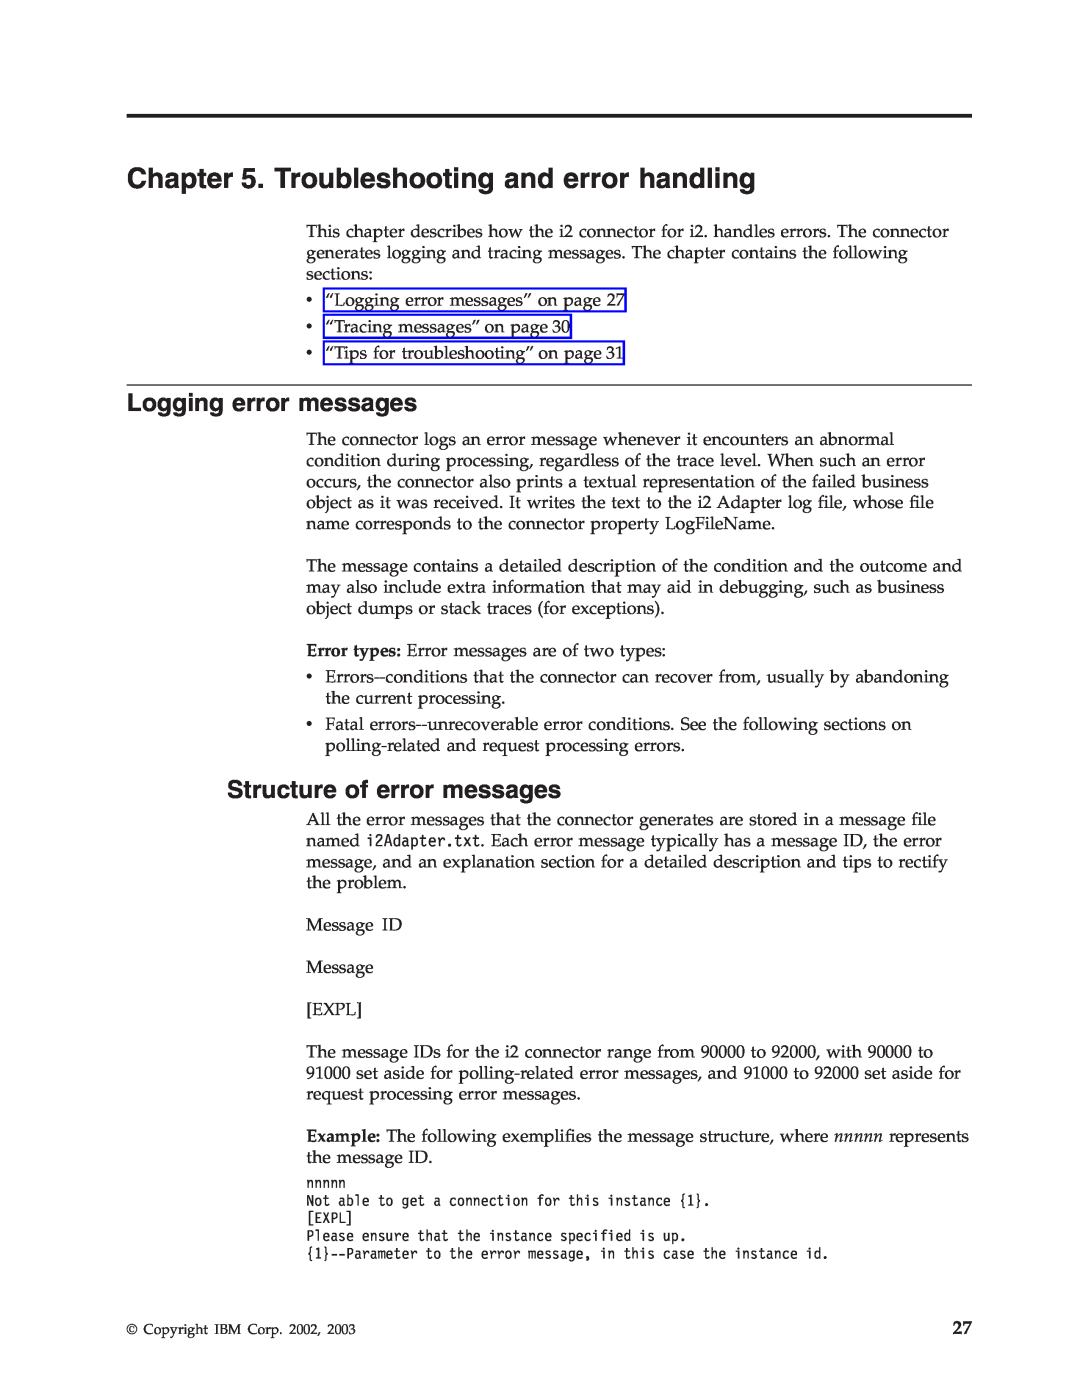 IBM WebSphere Business Integration Adapter manual Troubleshooting and error handling, Logging error messages 